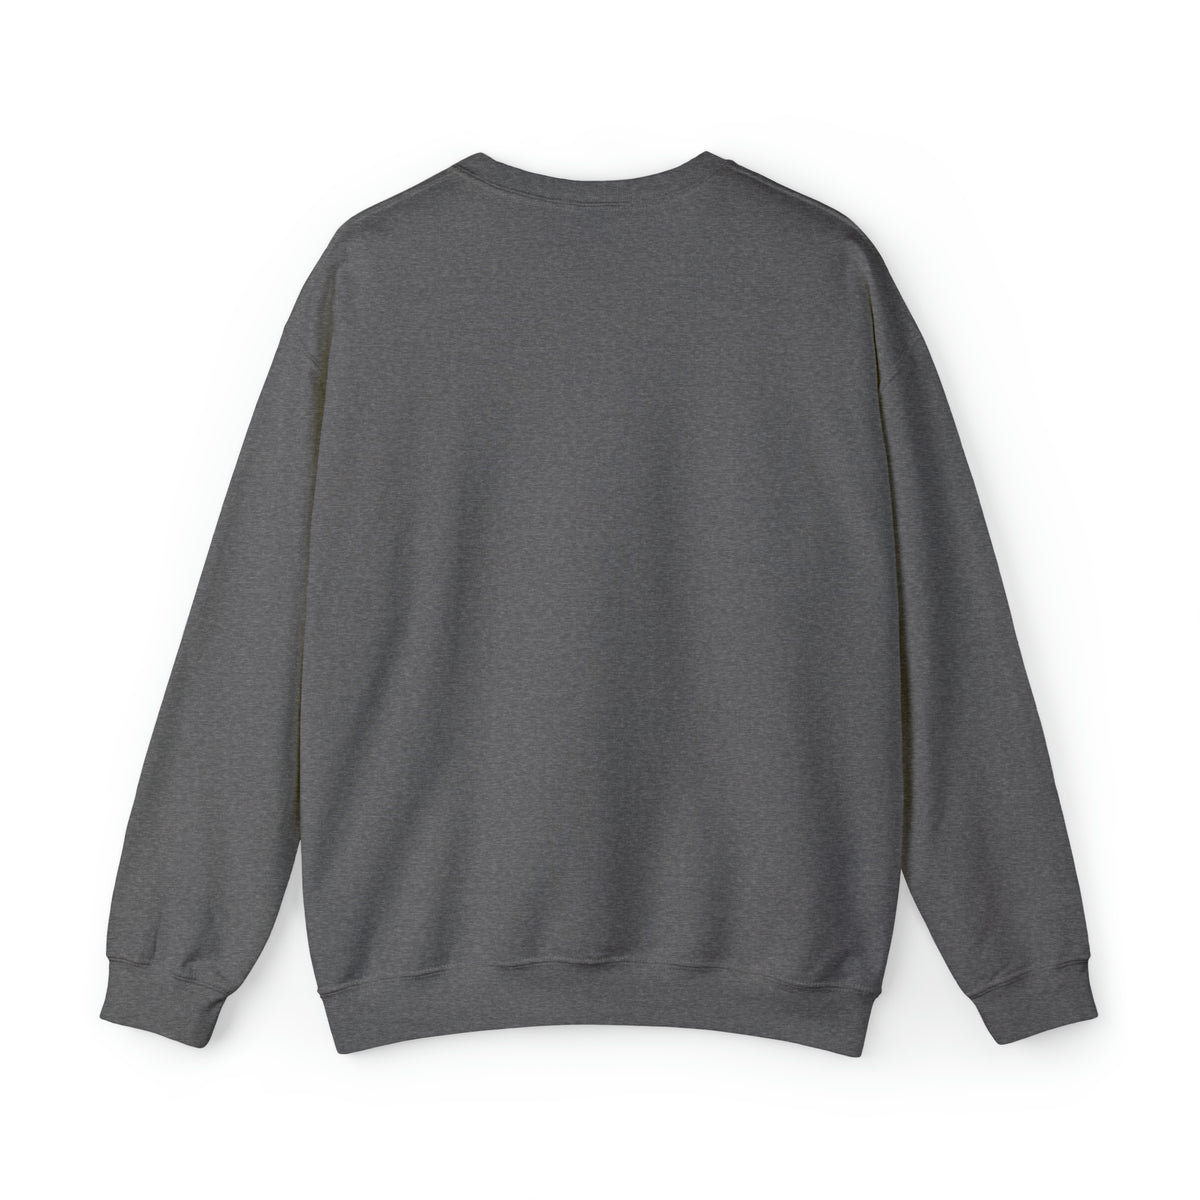 All American Dad - Unisex Heavy Blend™ Crewneck Sweatshirt